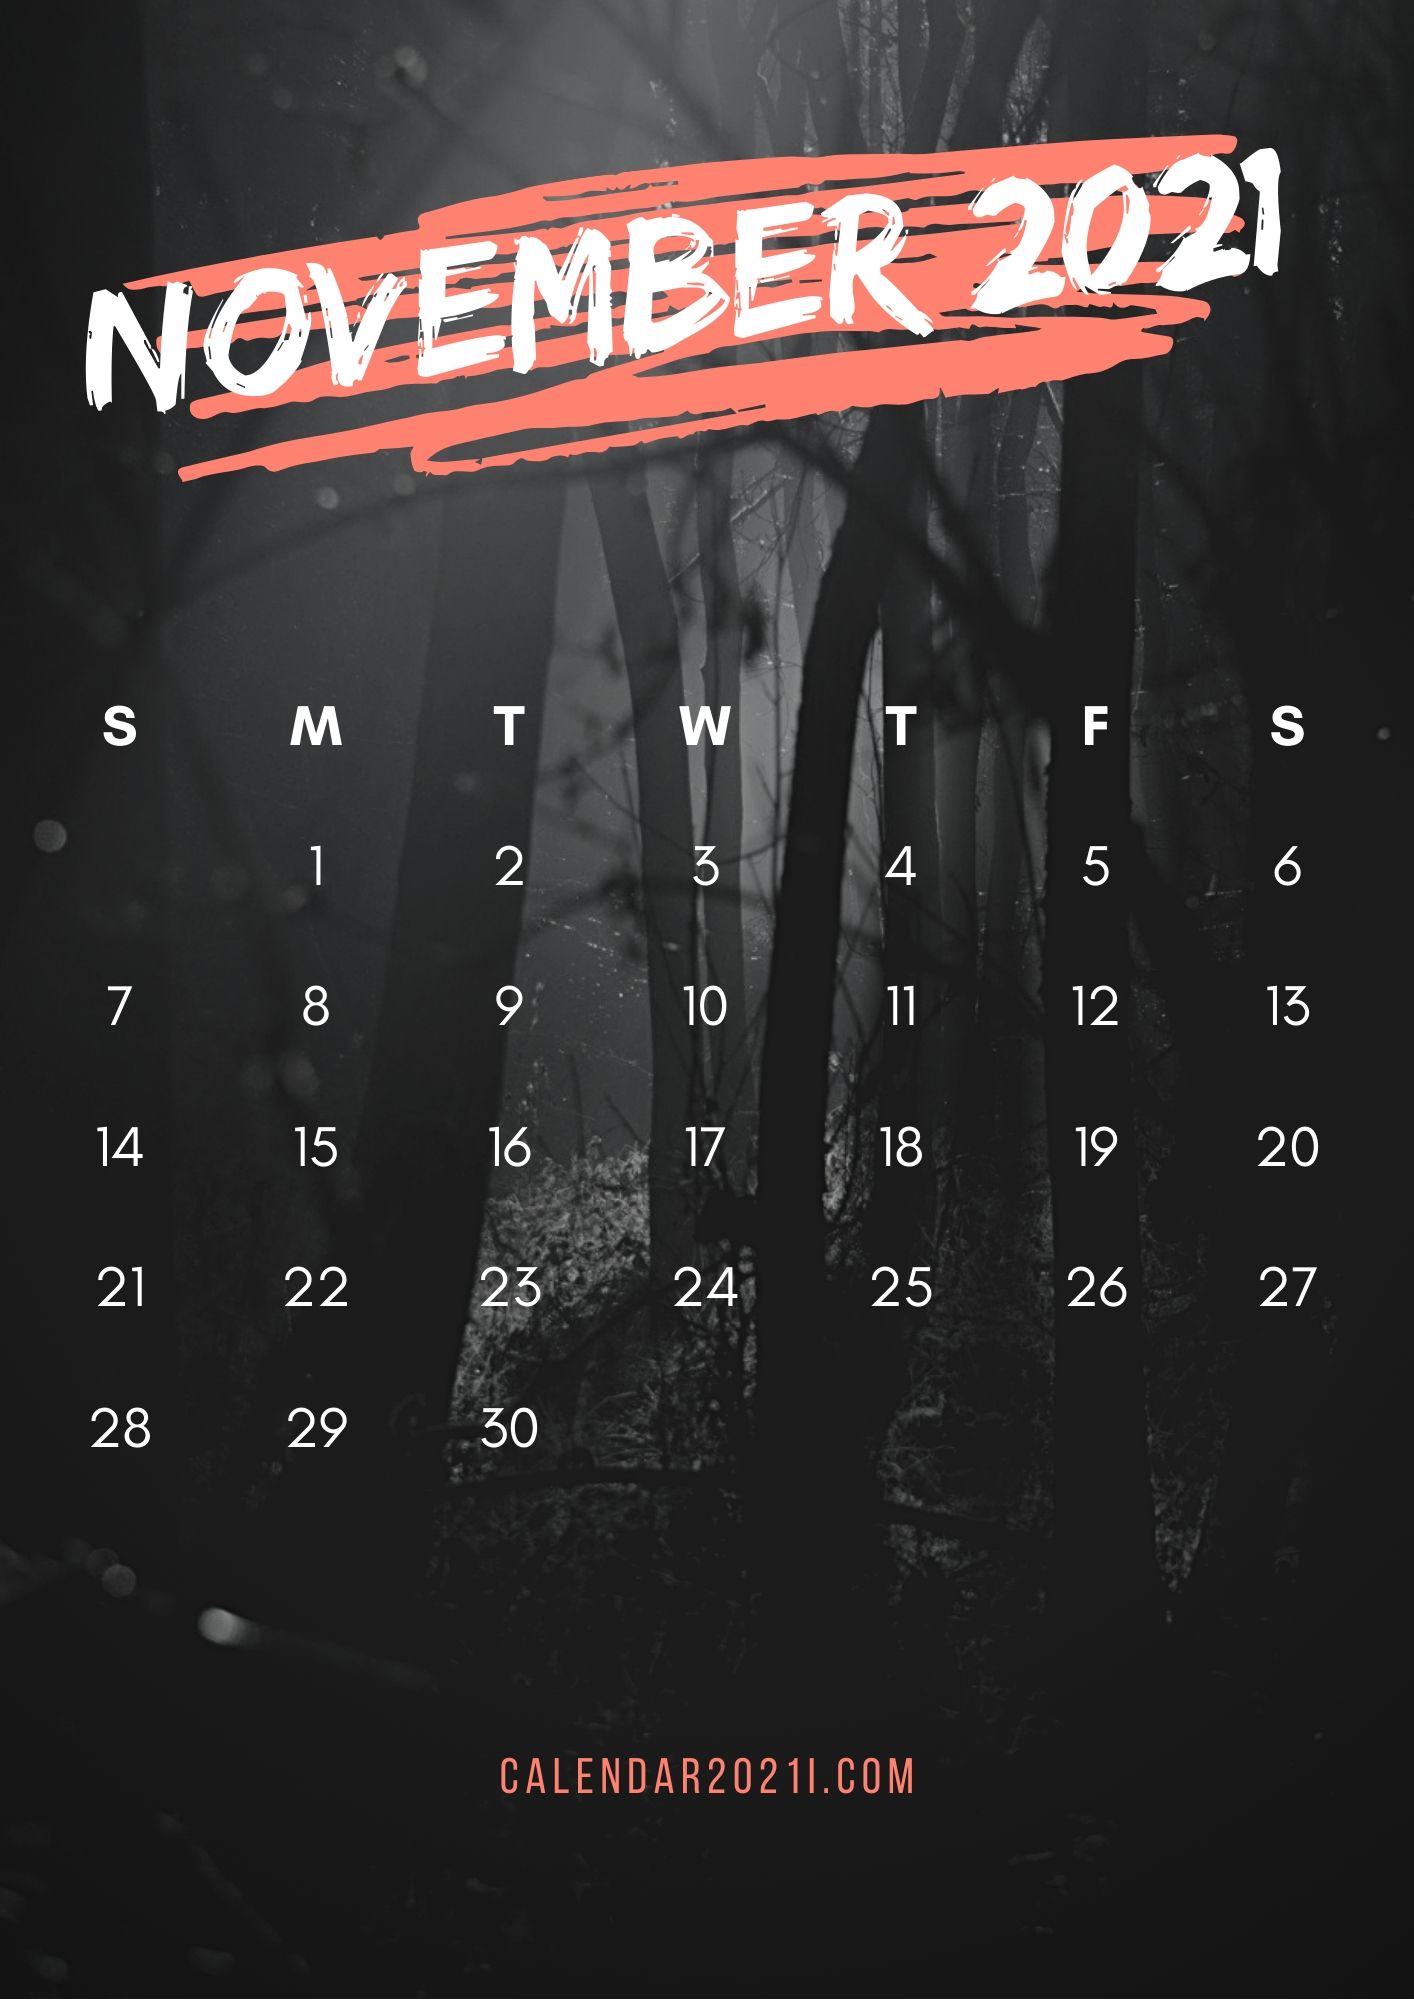 November 2021 iPhone Calendar Wallpaper